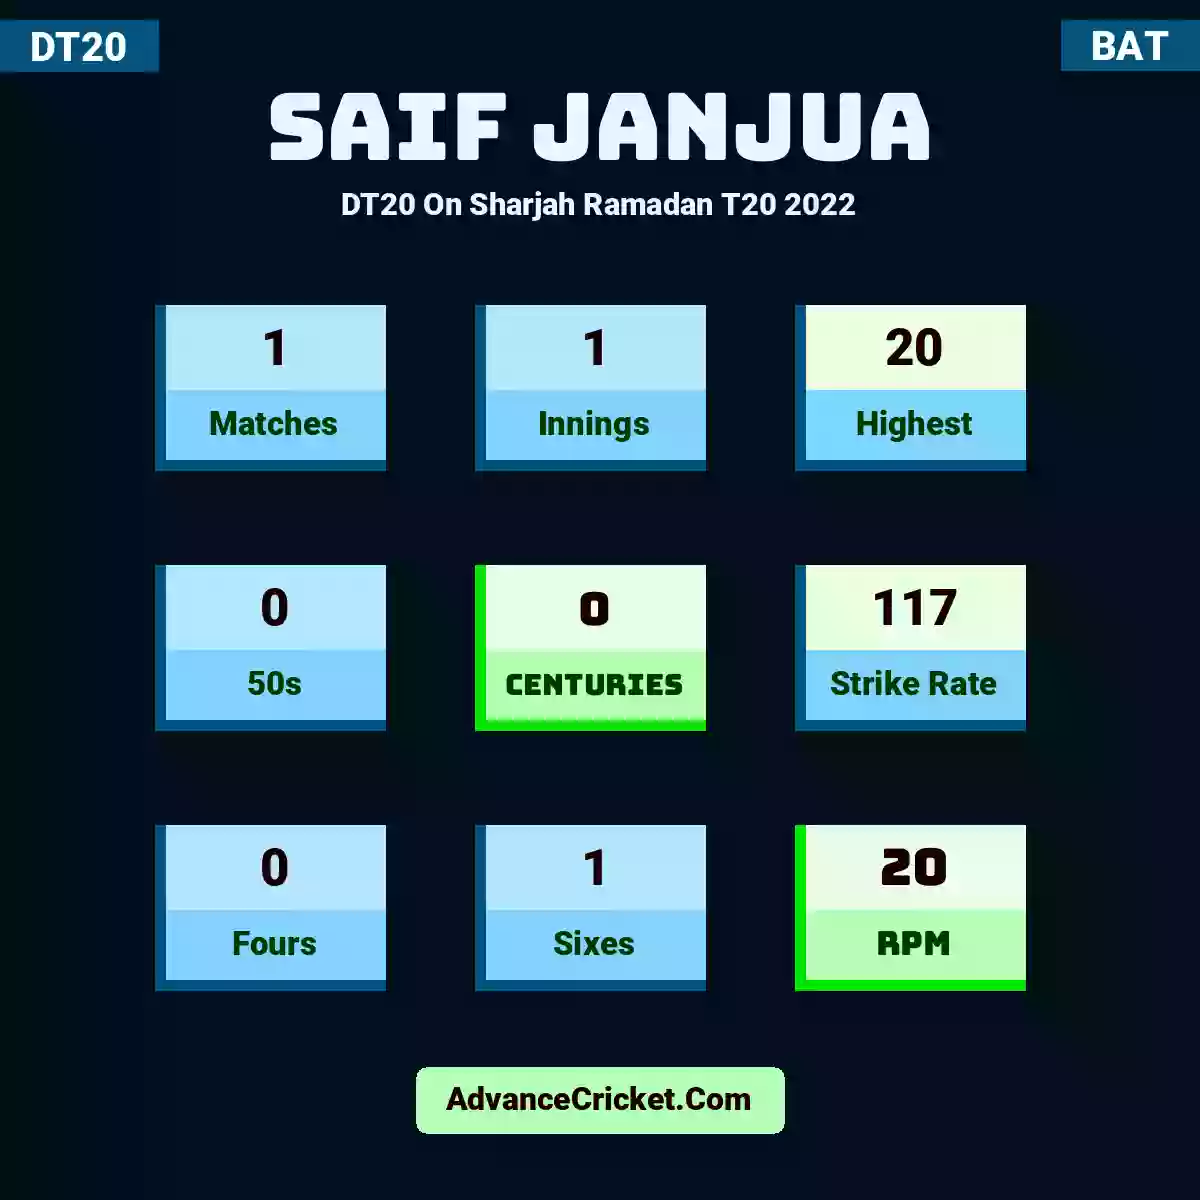 Saif Janjua DT20  On Sharjah Ramadan T20 2022, Saif Janjua played 1 matches, scored 20 runs as highest, 0 half-centuries, and 0 centuries, with a strike rate of 117. S.Janjua hit 0 fours and 1 sixes, with an RPM of 20.